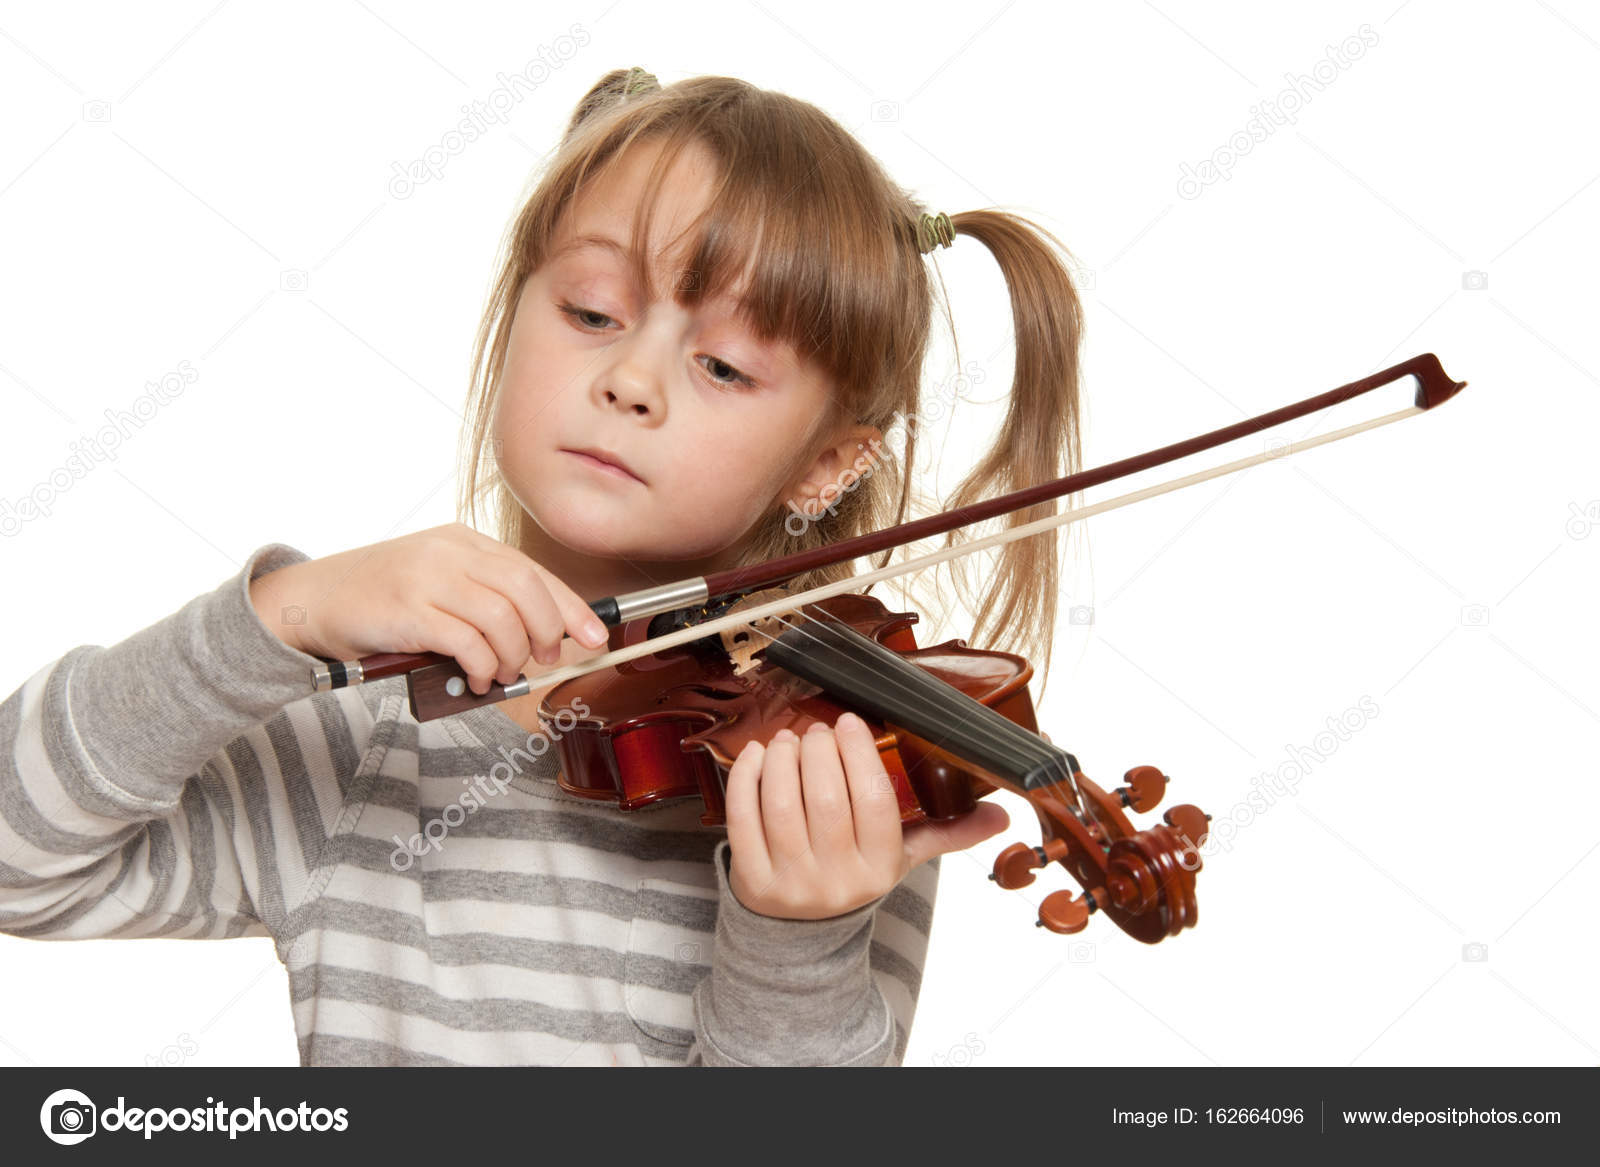 Child with violin Stock Photo ©jeecis 162664096